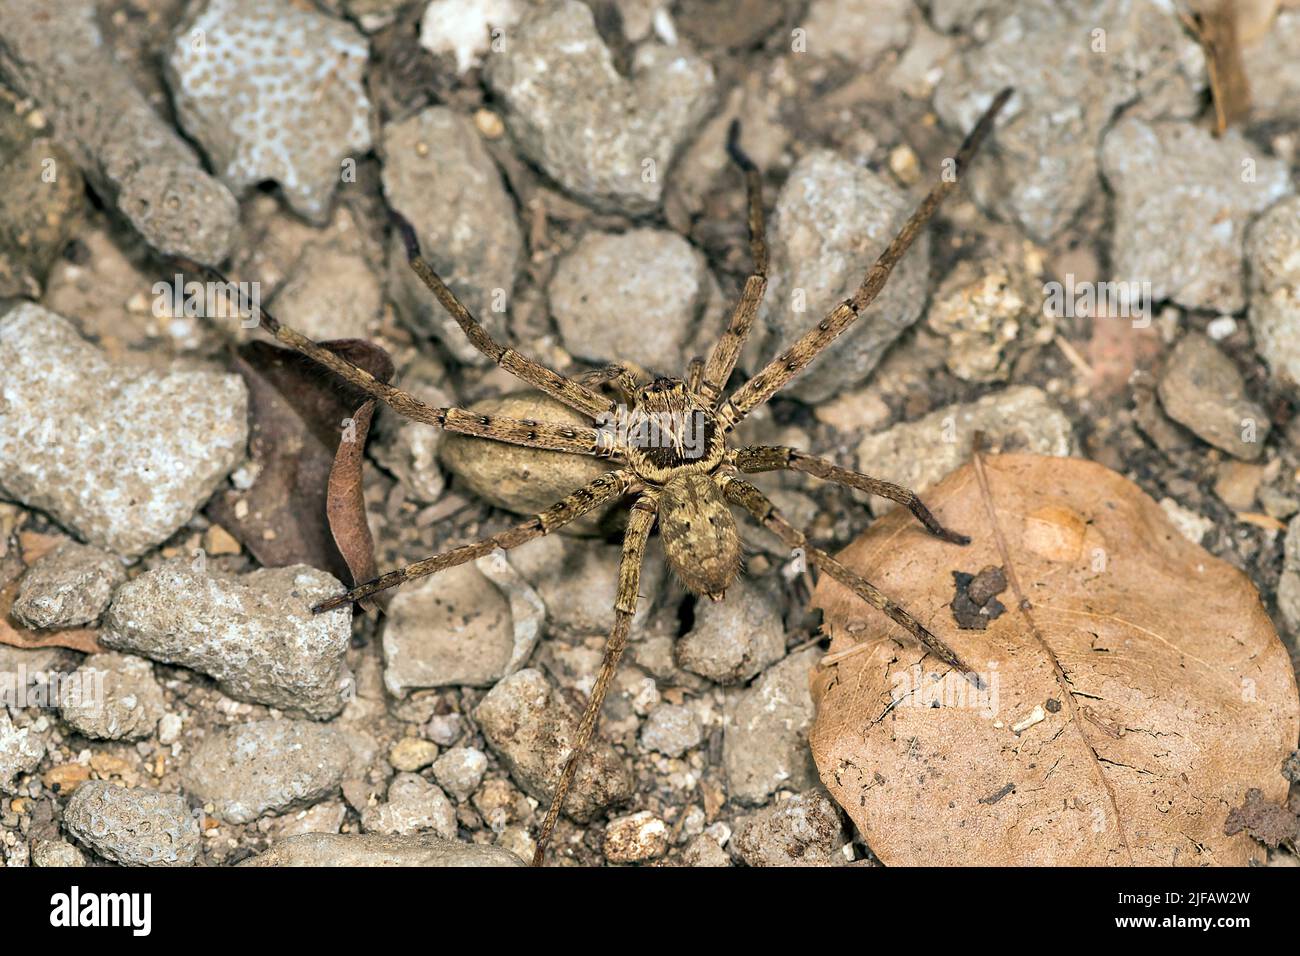 Huntsman spider (Heteropoda sp.?) from Komodo Island, Indonesia Stock Photo